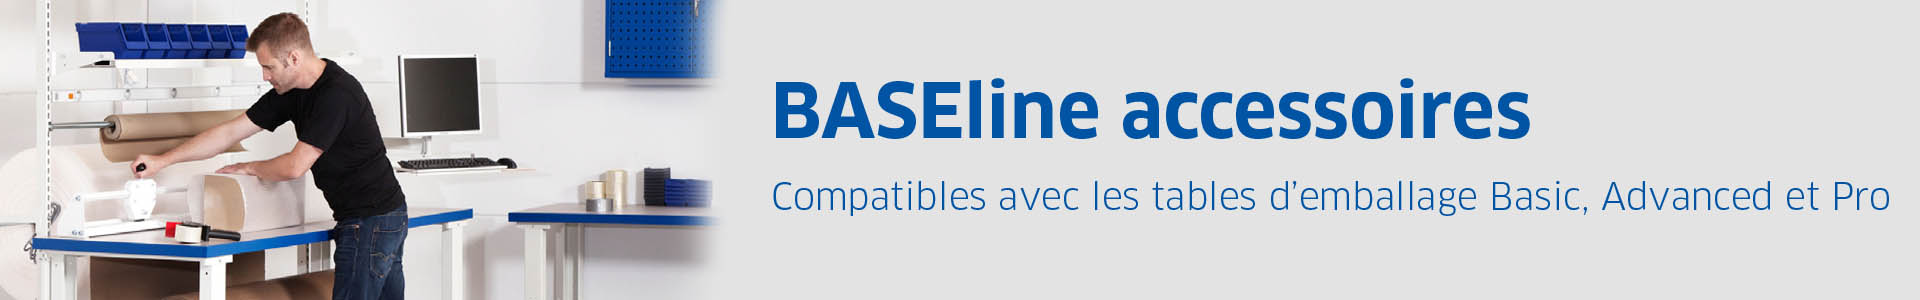 fullsize_BASEline_accessoires_1920x300